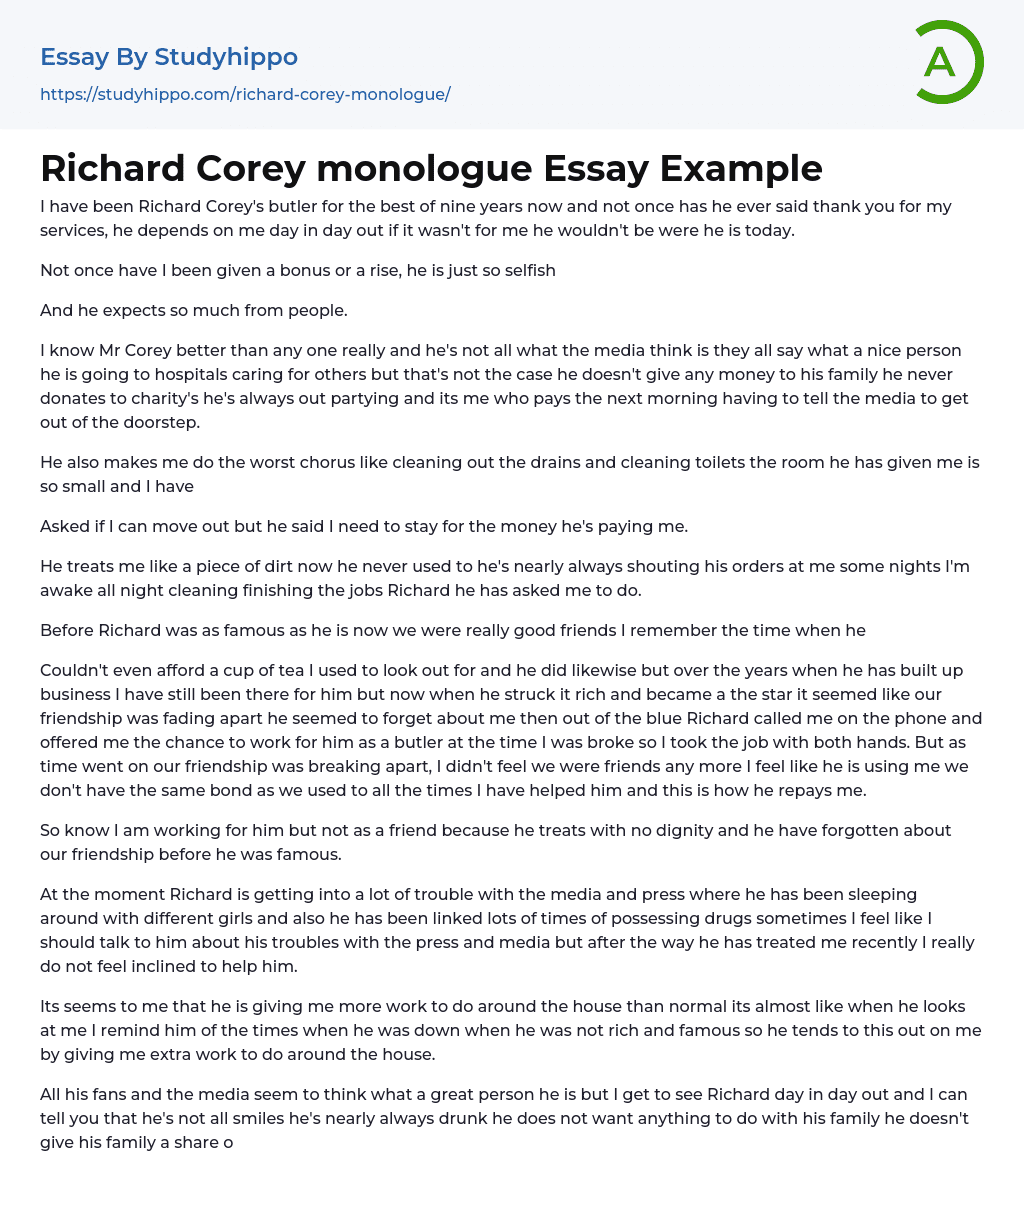 Richard Corey monologue Essay Example